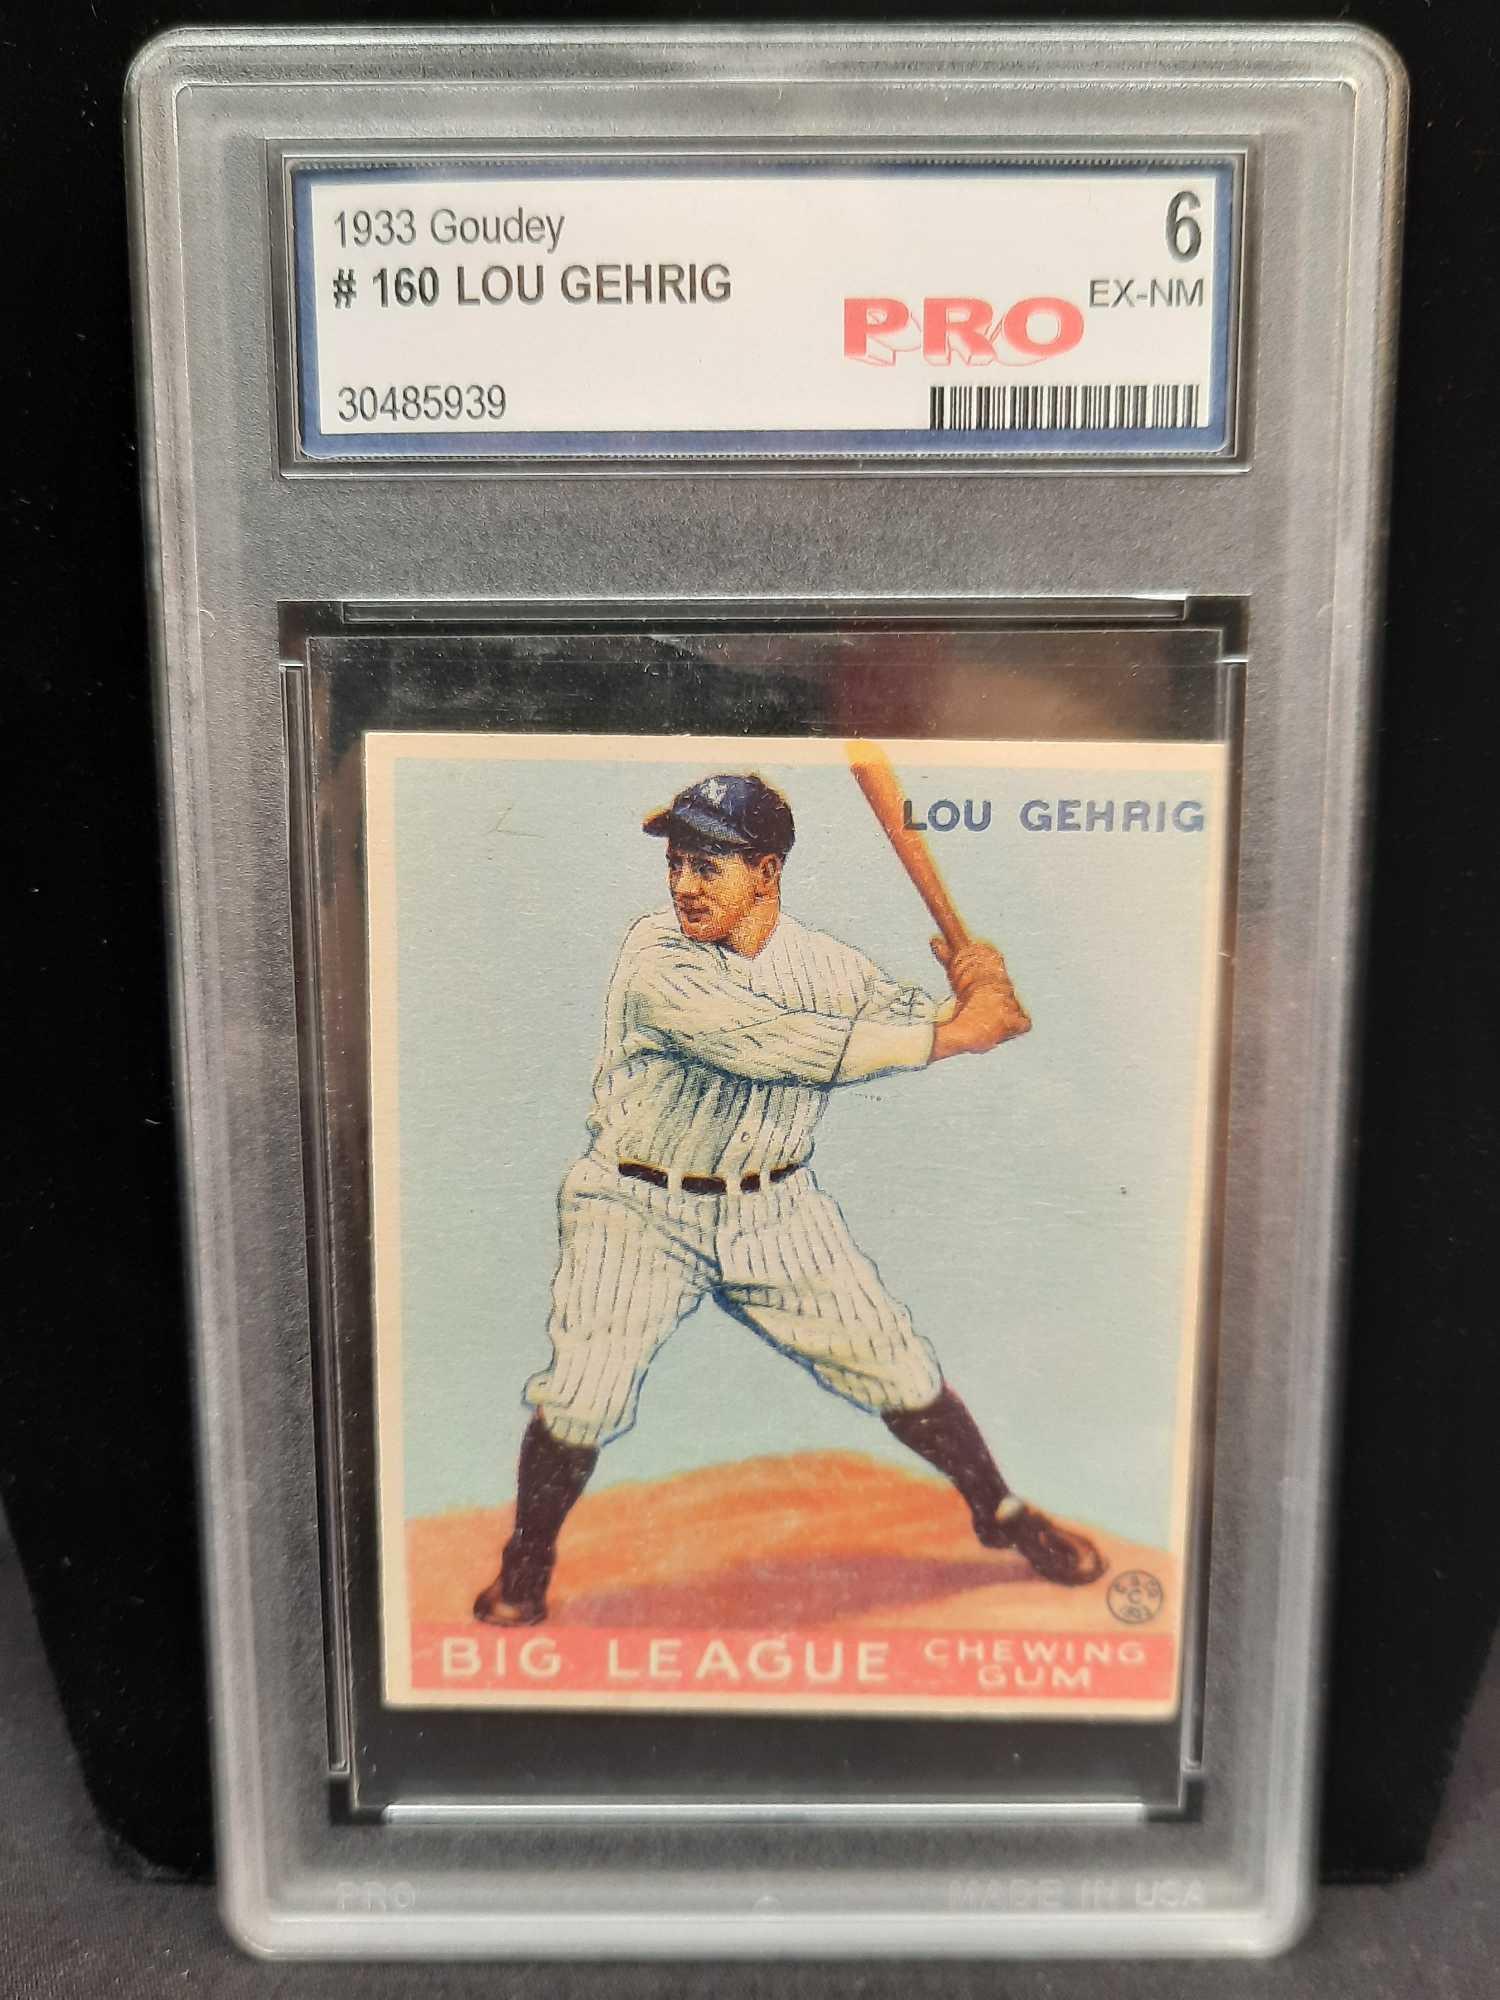 1933 Goudey #160 Lou Gehrig Graded 6 EX-NM Pro Baseball Card